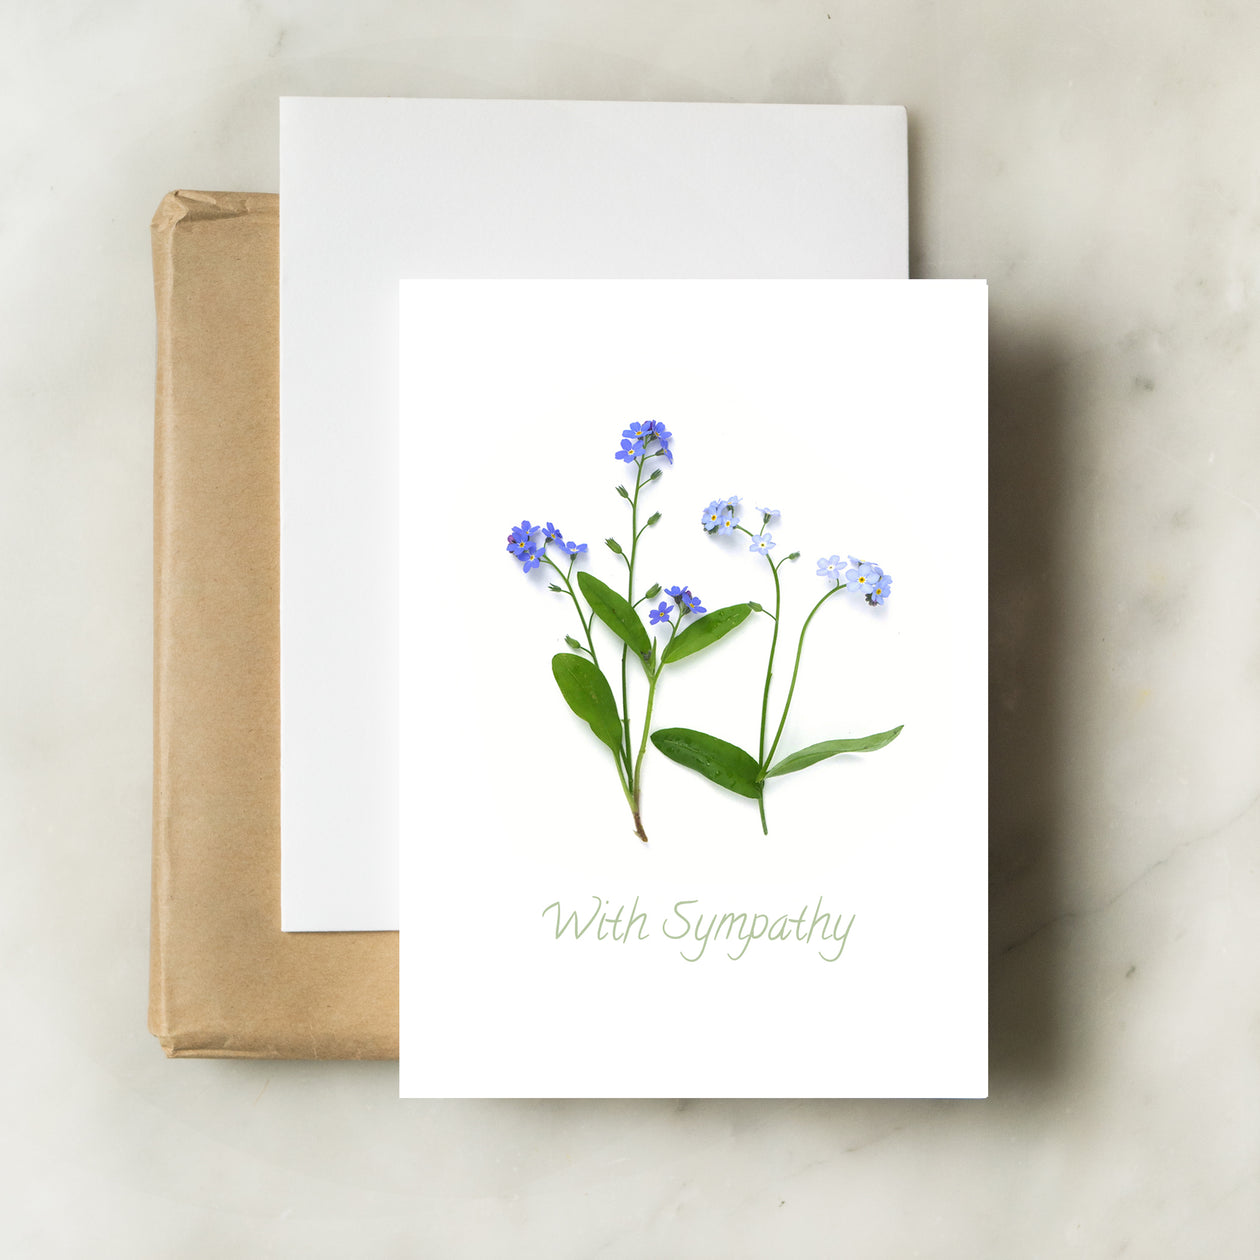 Sympathy card - Forget me nots